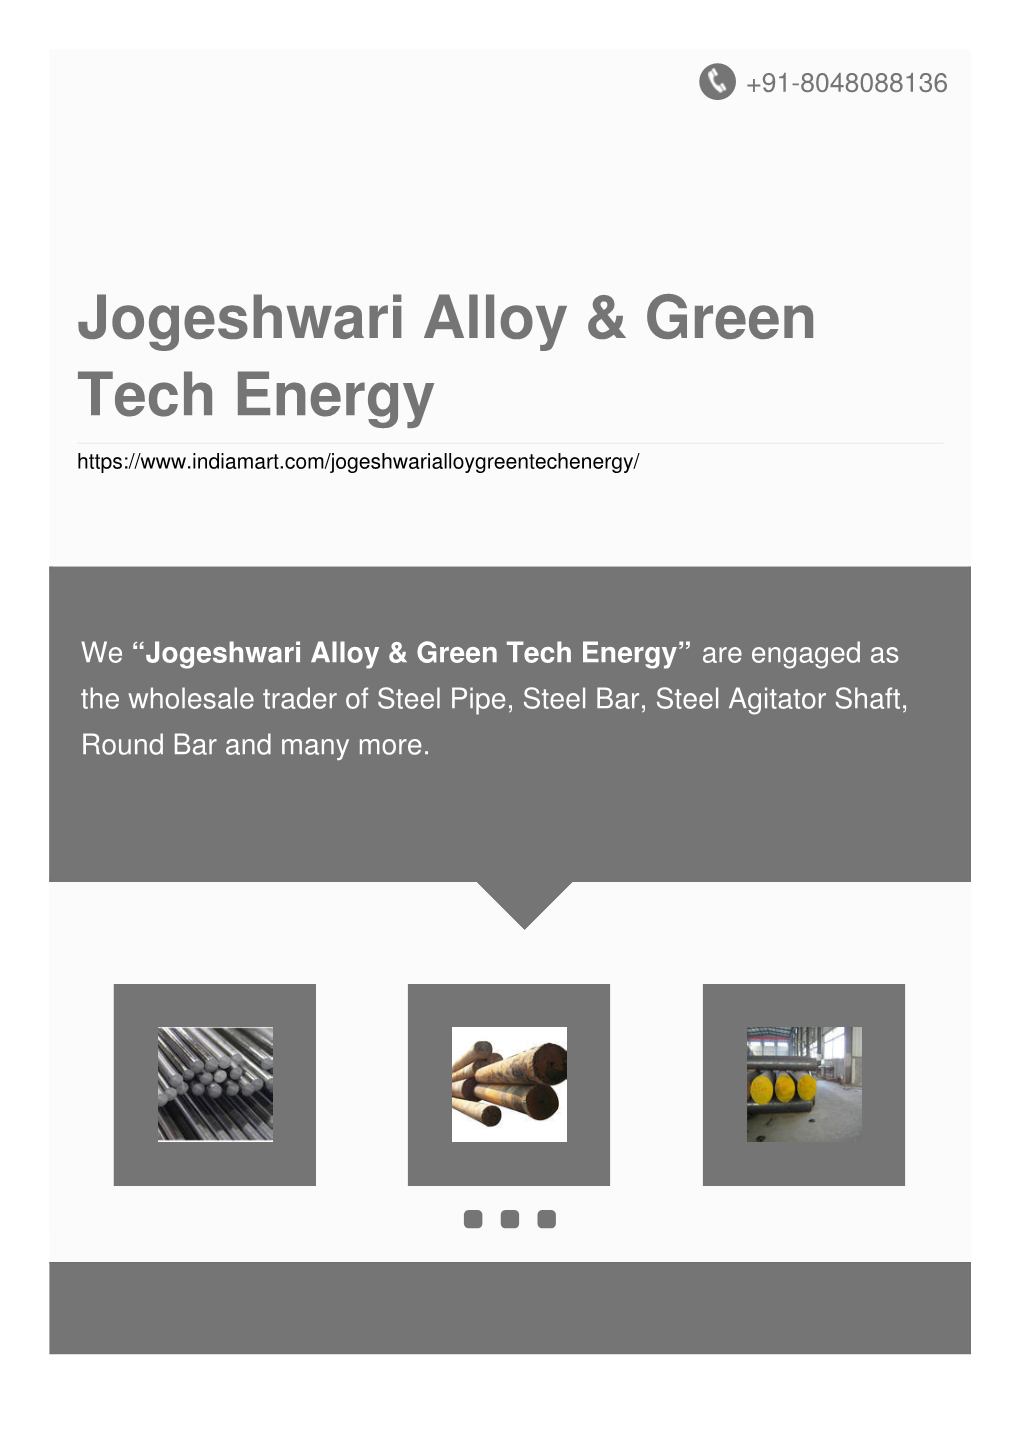 Jogeshwari Alloy & Green Tech Energy